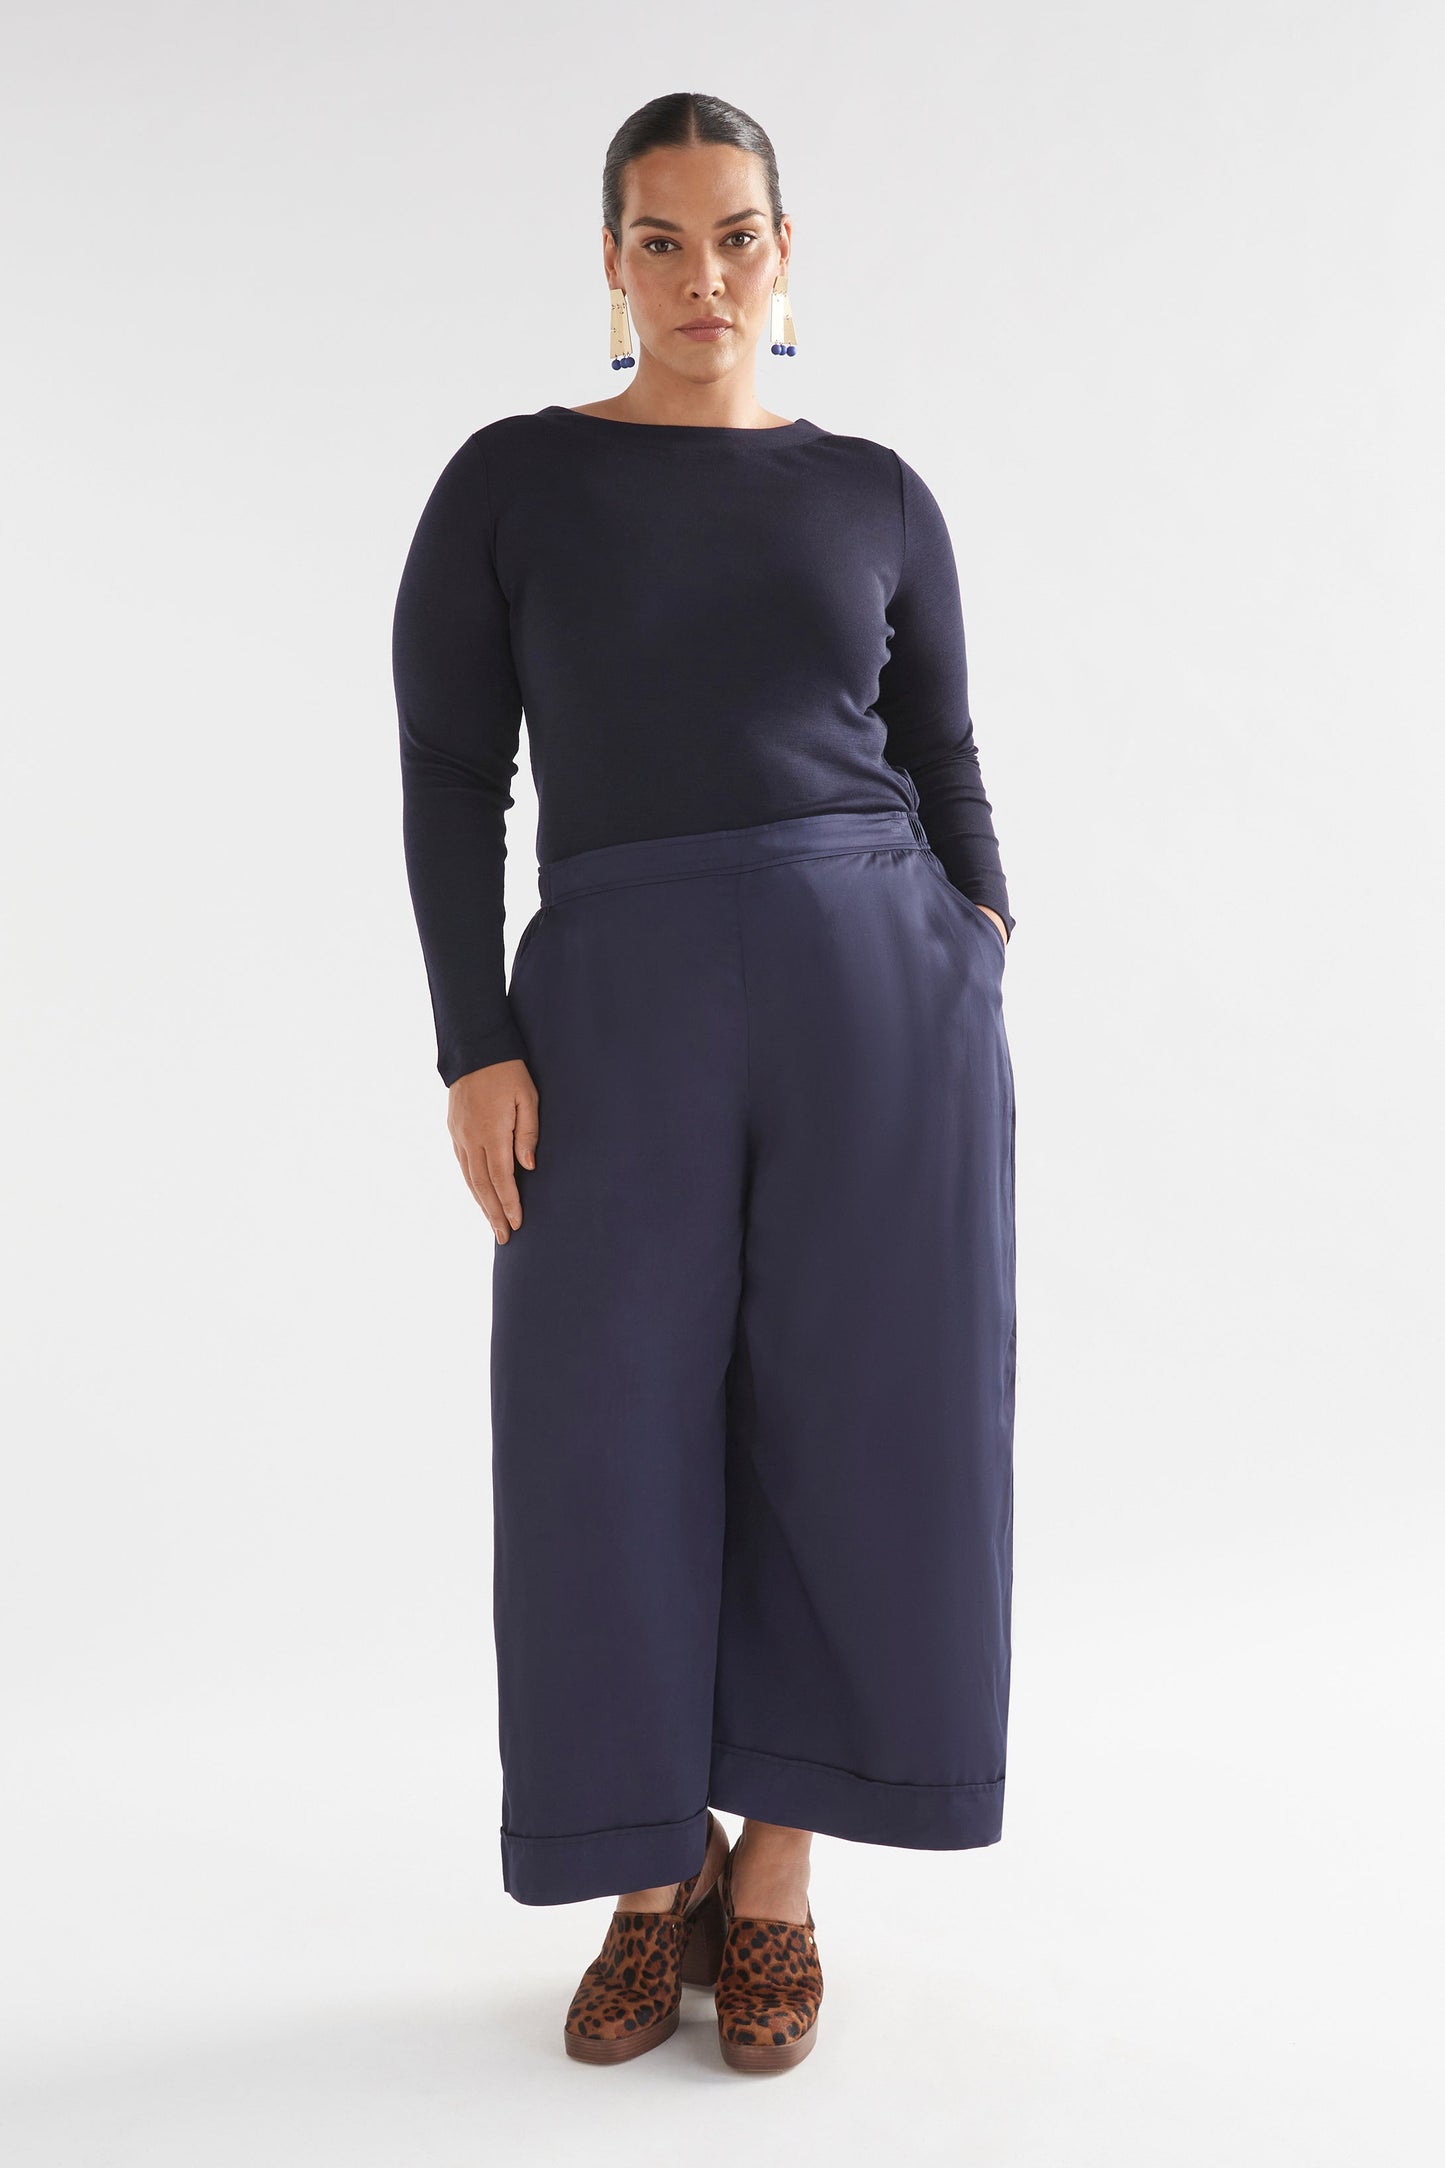 Grej Long Sleeve Merino Knit Top Model Curve Front Full Body | DARK NAVY